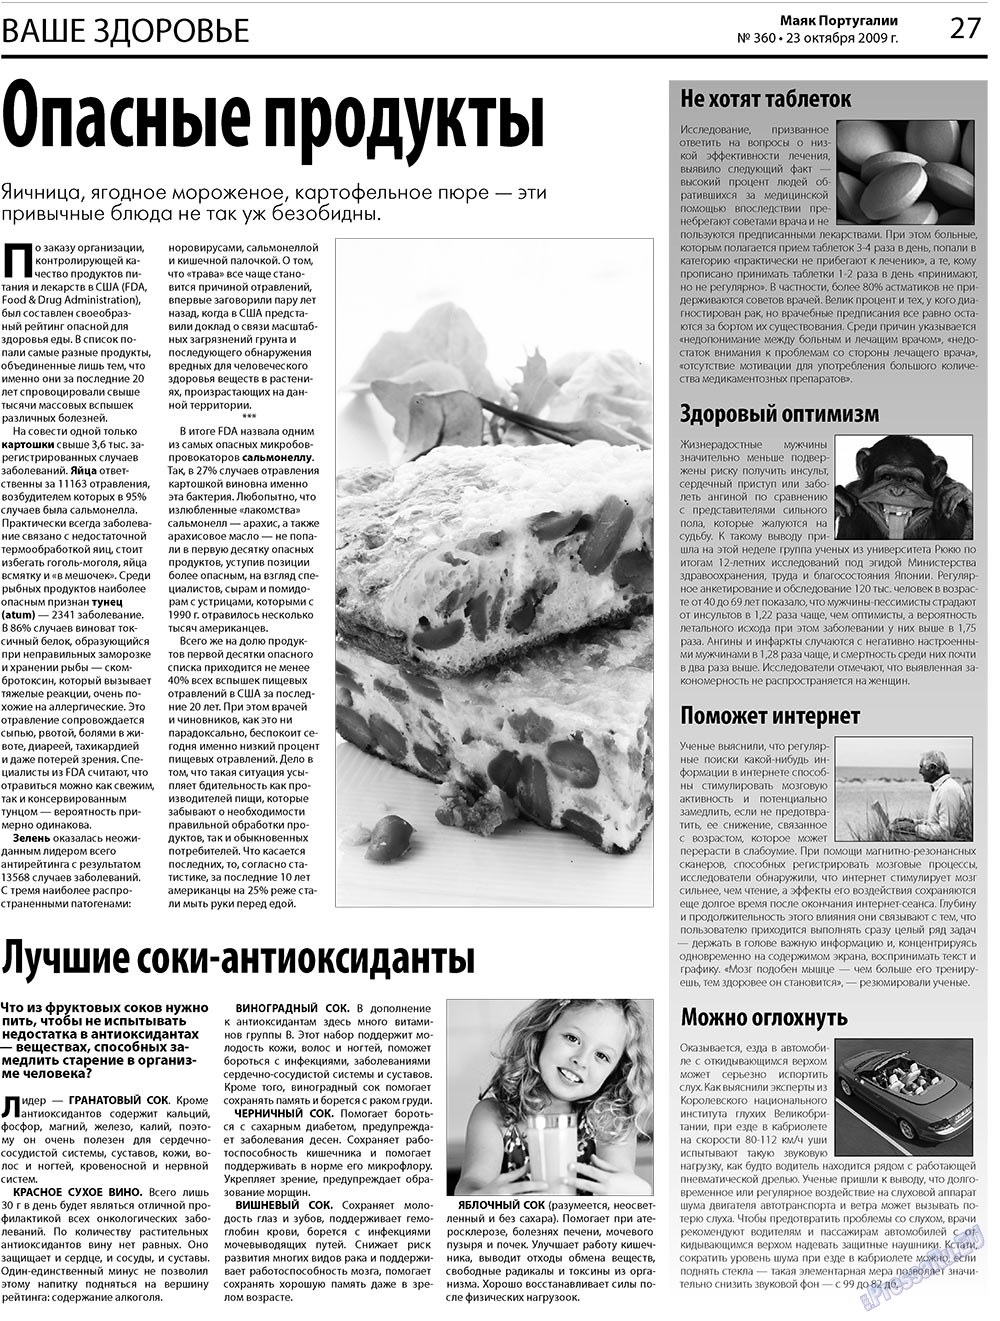 Маяк Португалии, газета. 2009 №42 стр.27